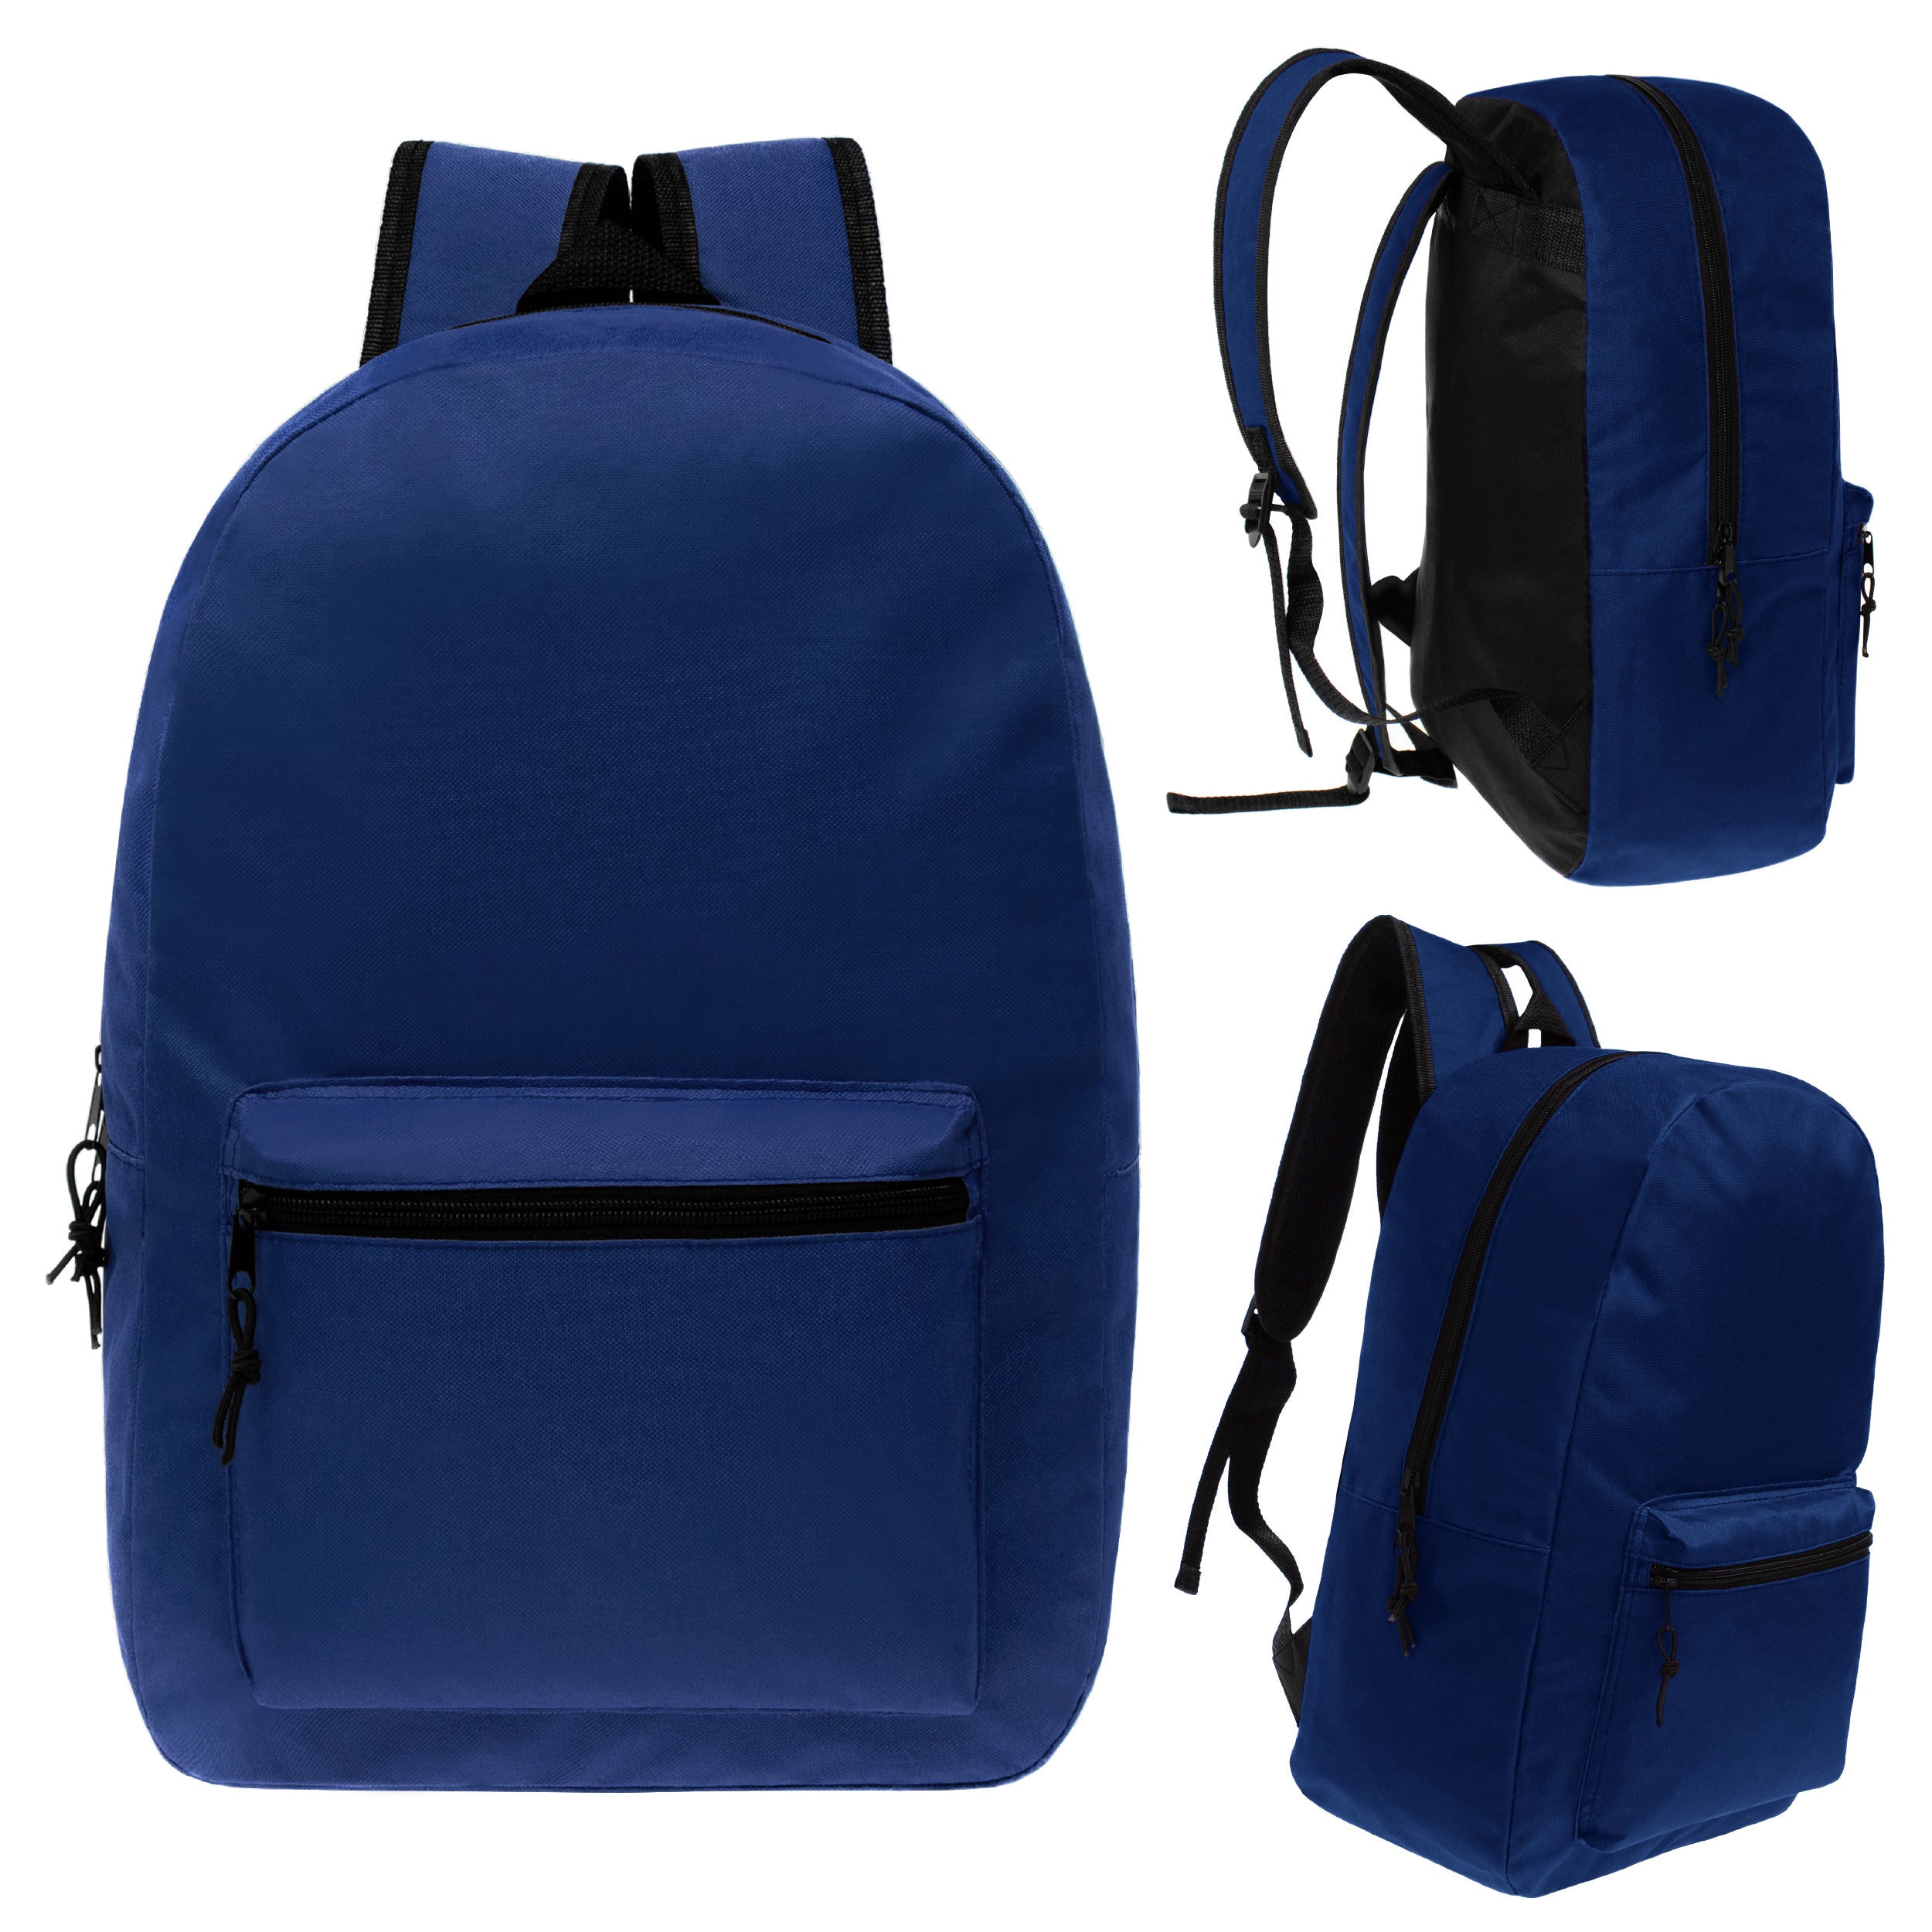 Wholesale Backpacks and School | Backpacks USA Supplies